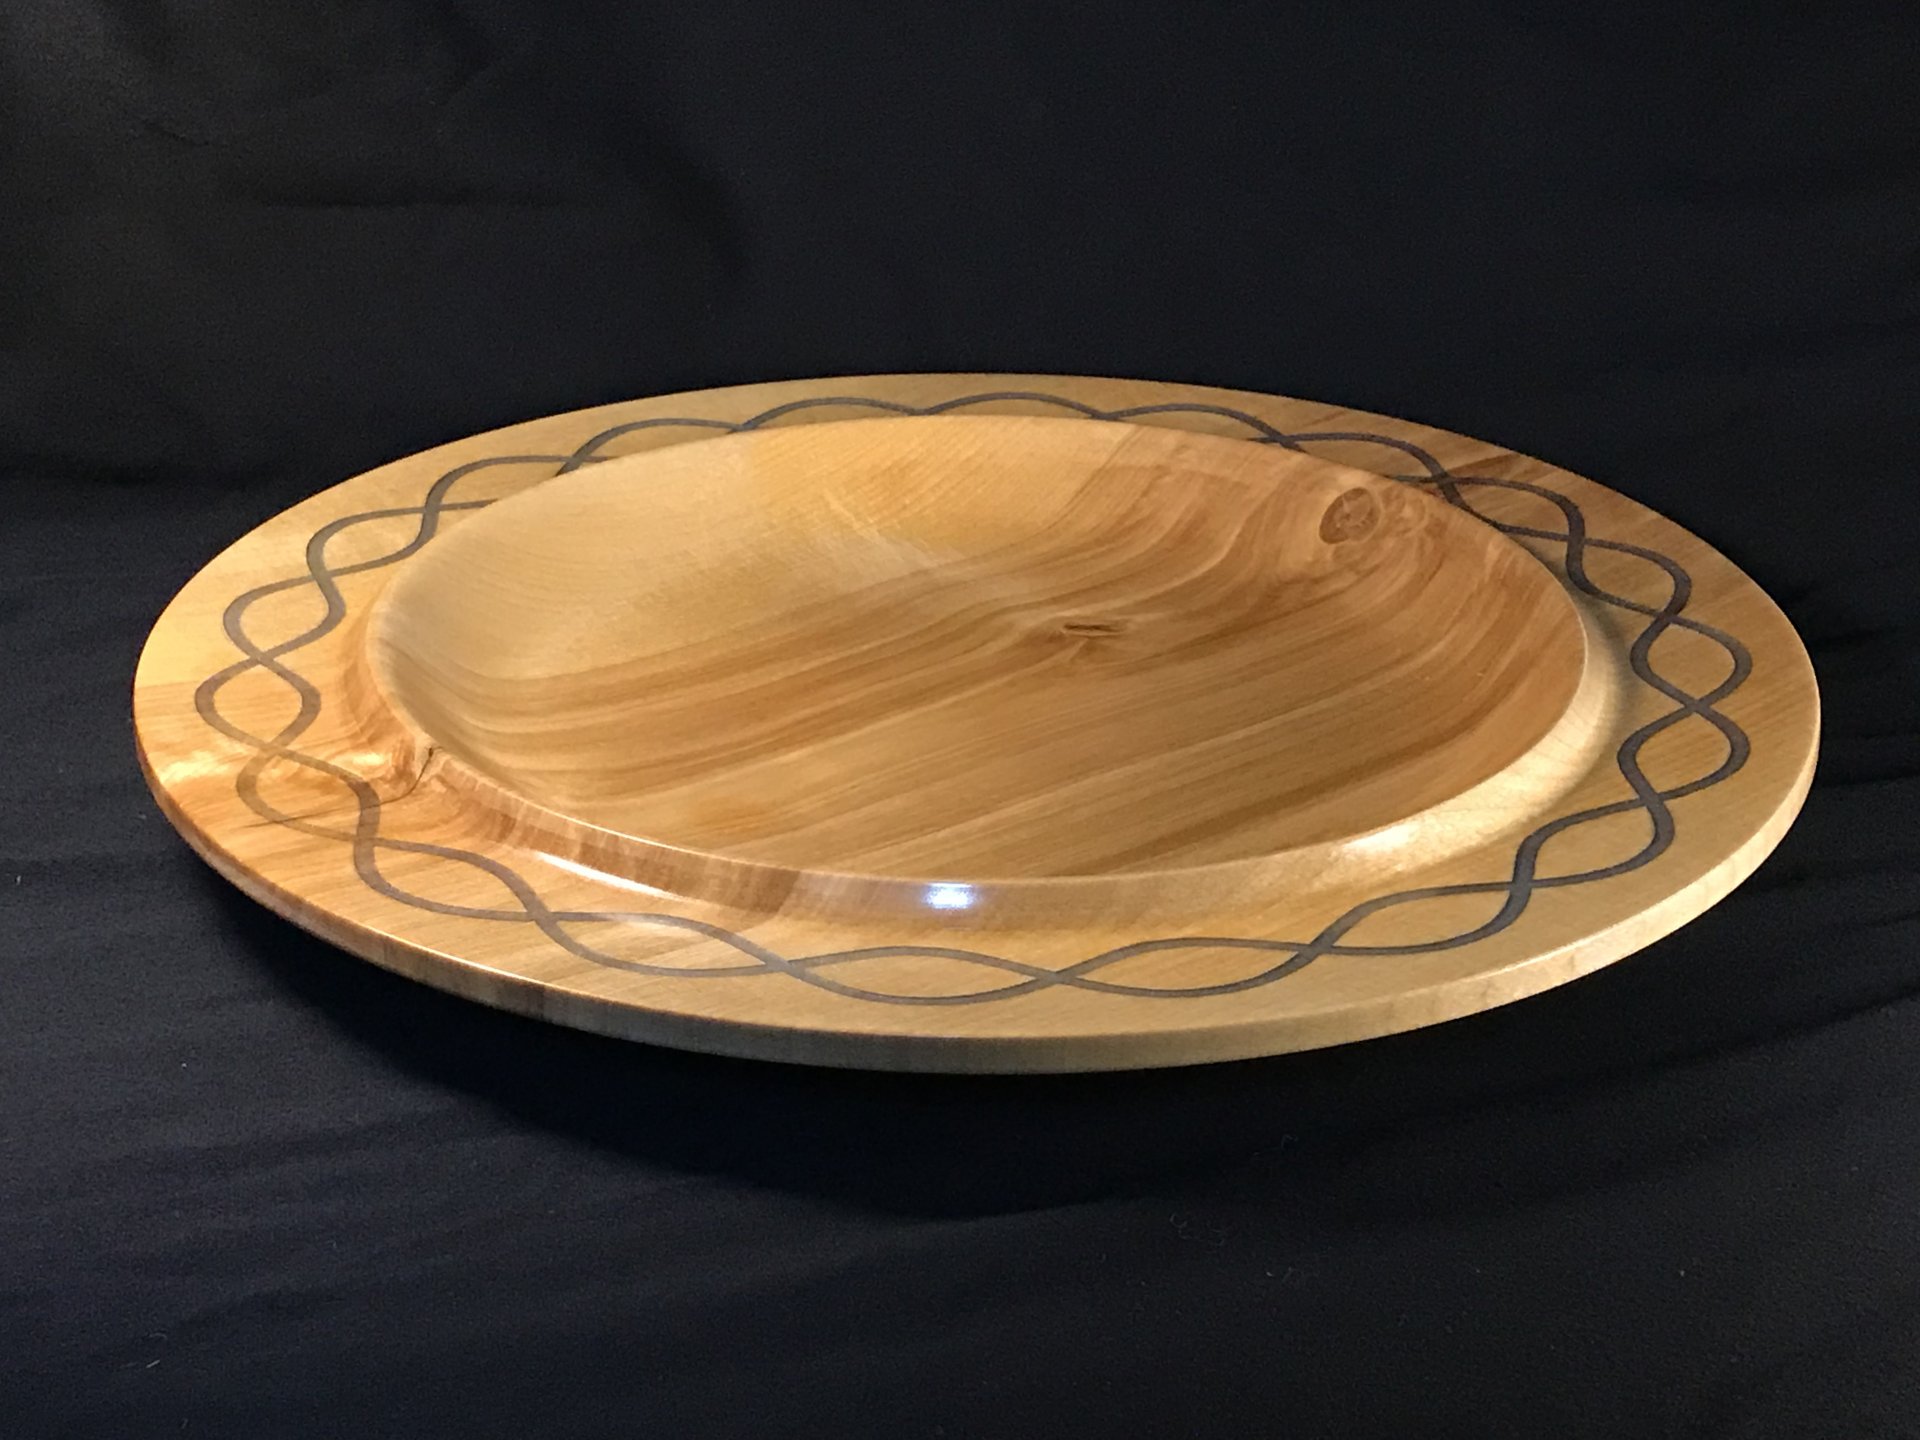 13" Birch Platter with coloured epoxy rim inlay